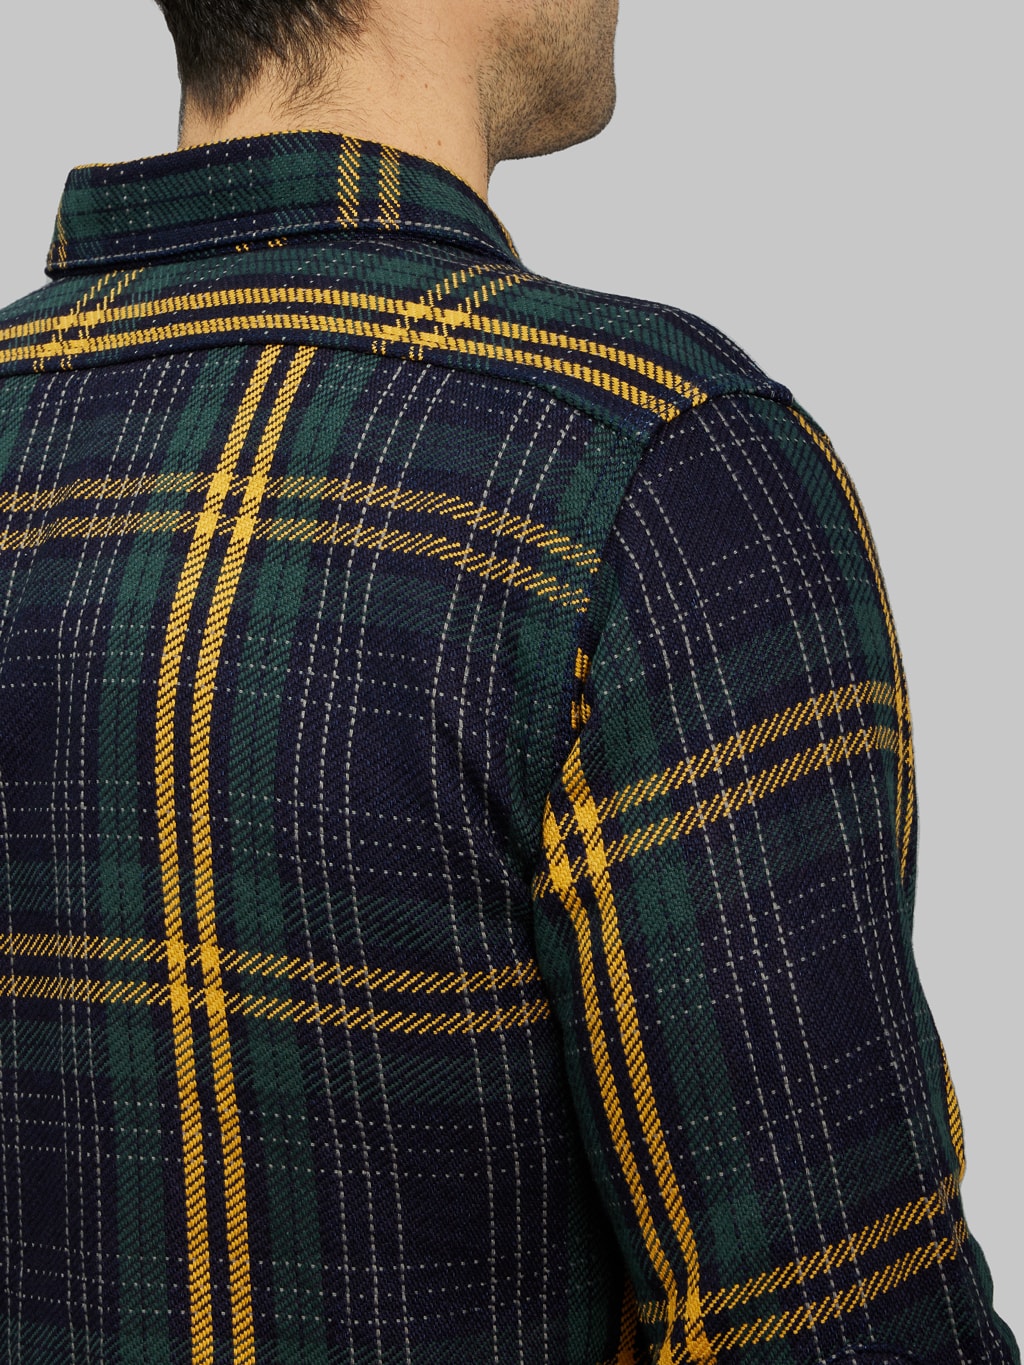 Samurai Jeans Rope Dyed Indigo Heavy Flannel Shirt Green back details